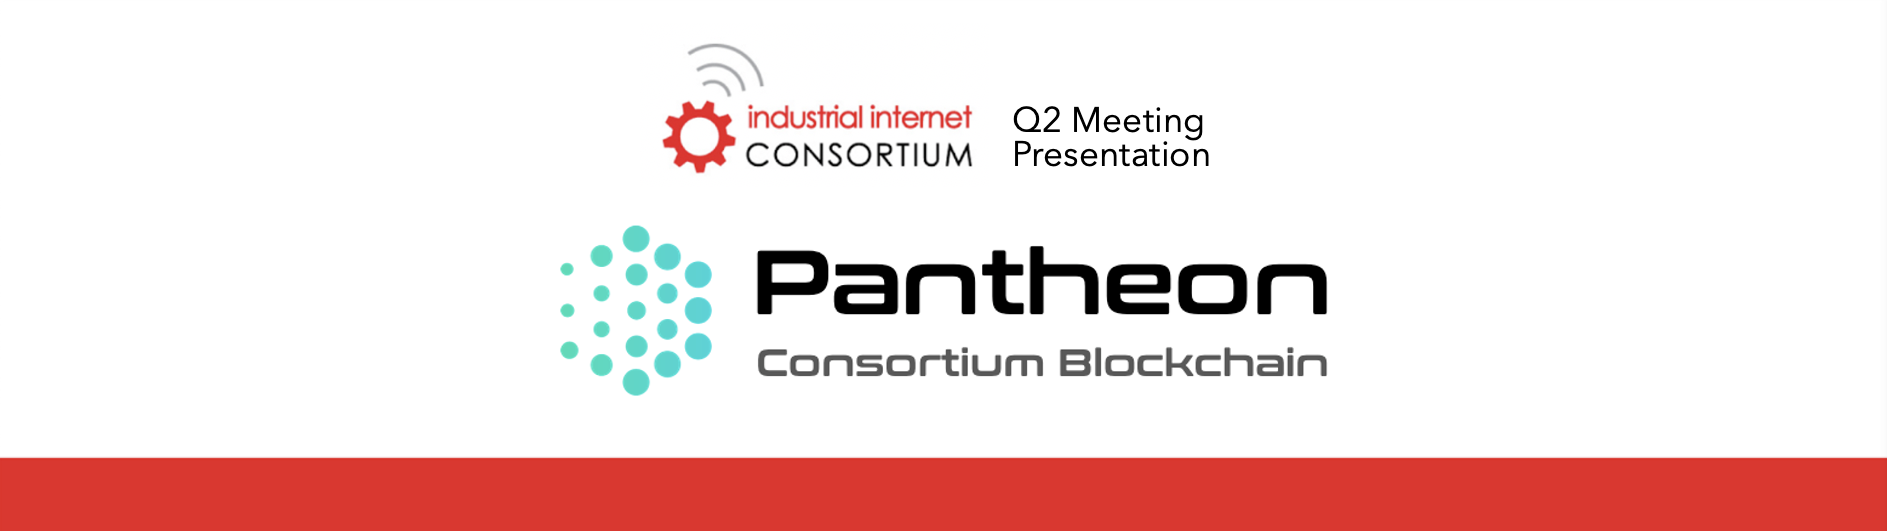 IoTeX Presents Pantheon Consortium Blockchain at IIC Q2 Meeting